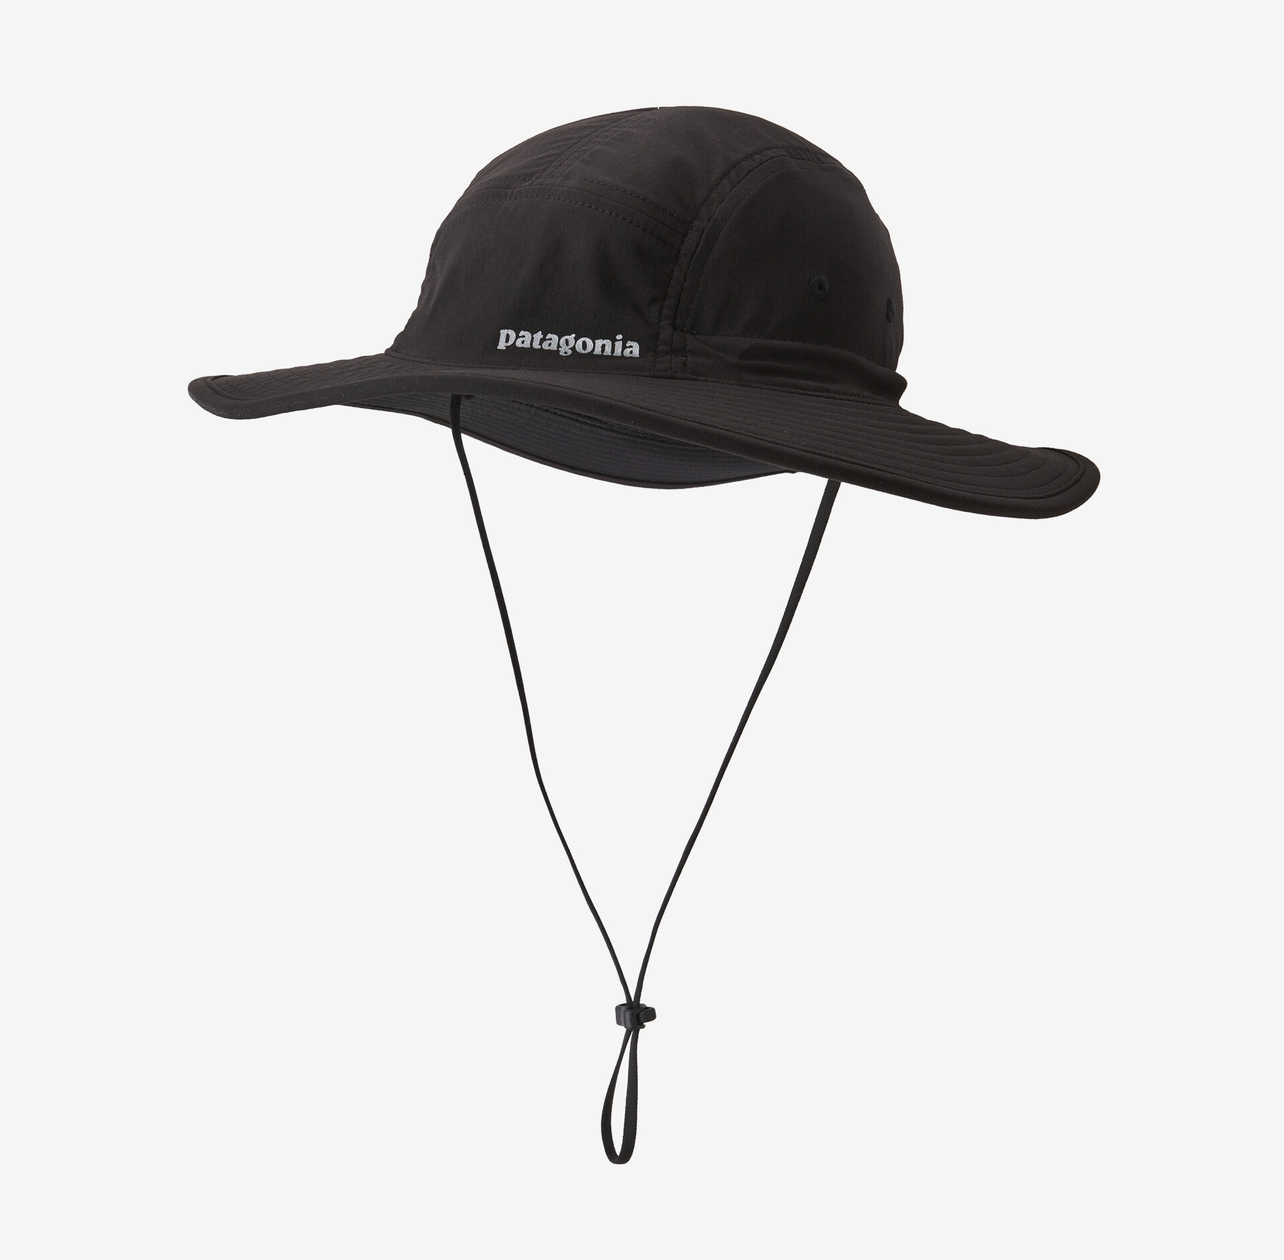 Patagonia Quandary Brimmer Hat - Black - S/M